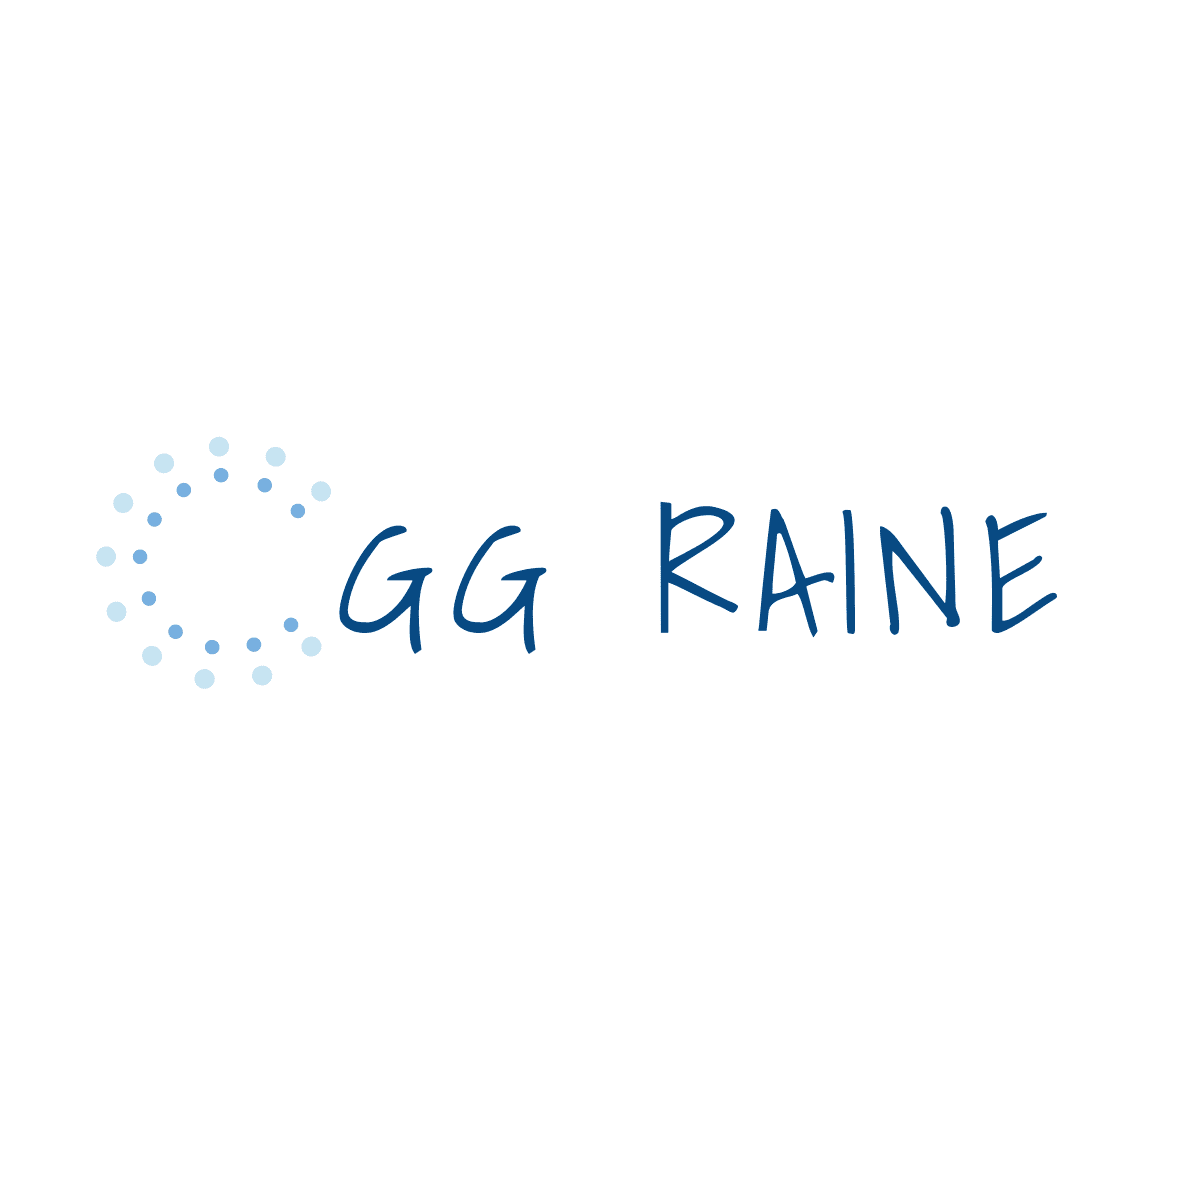 GG Raine